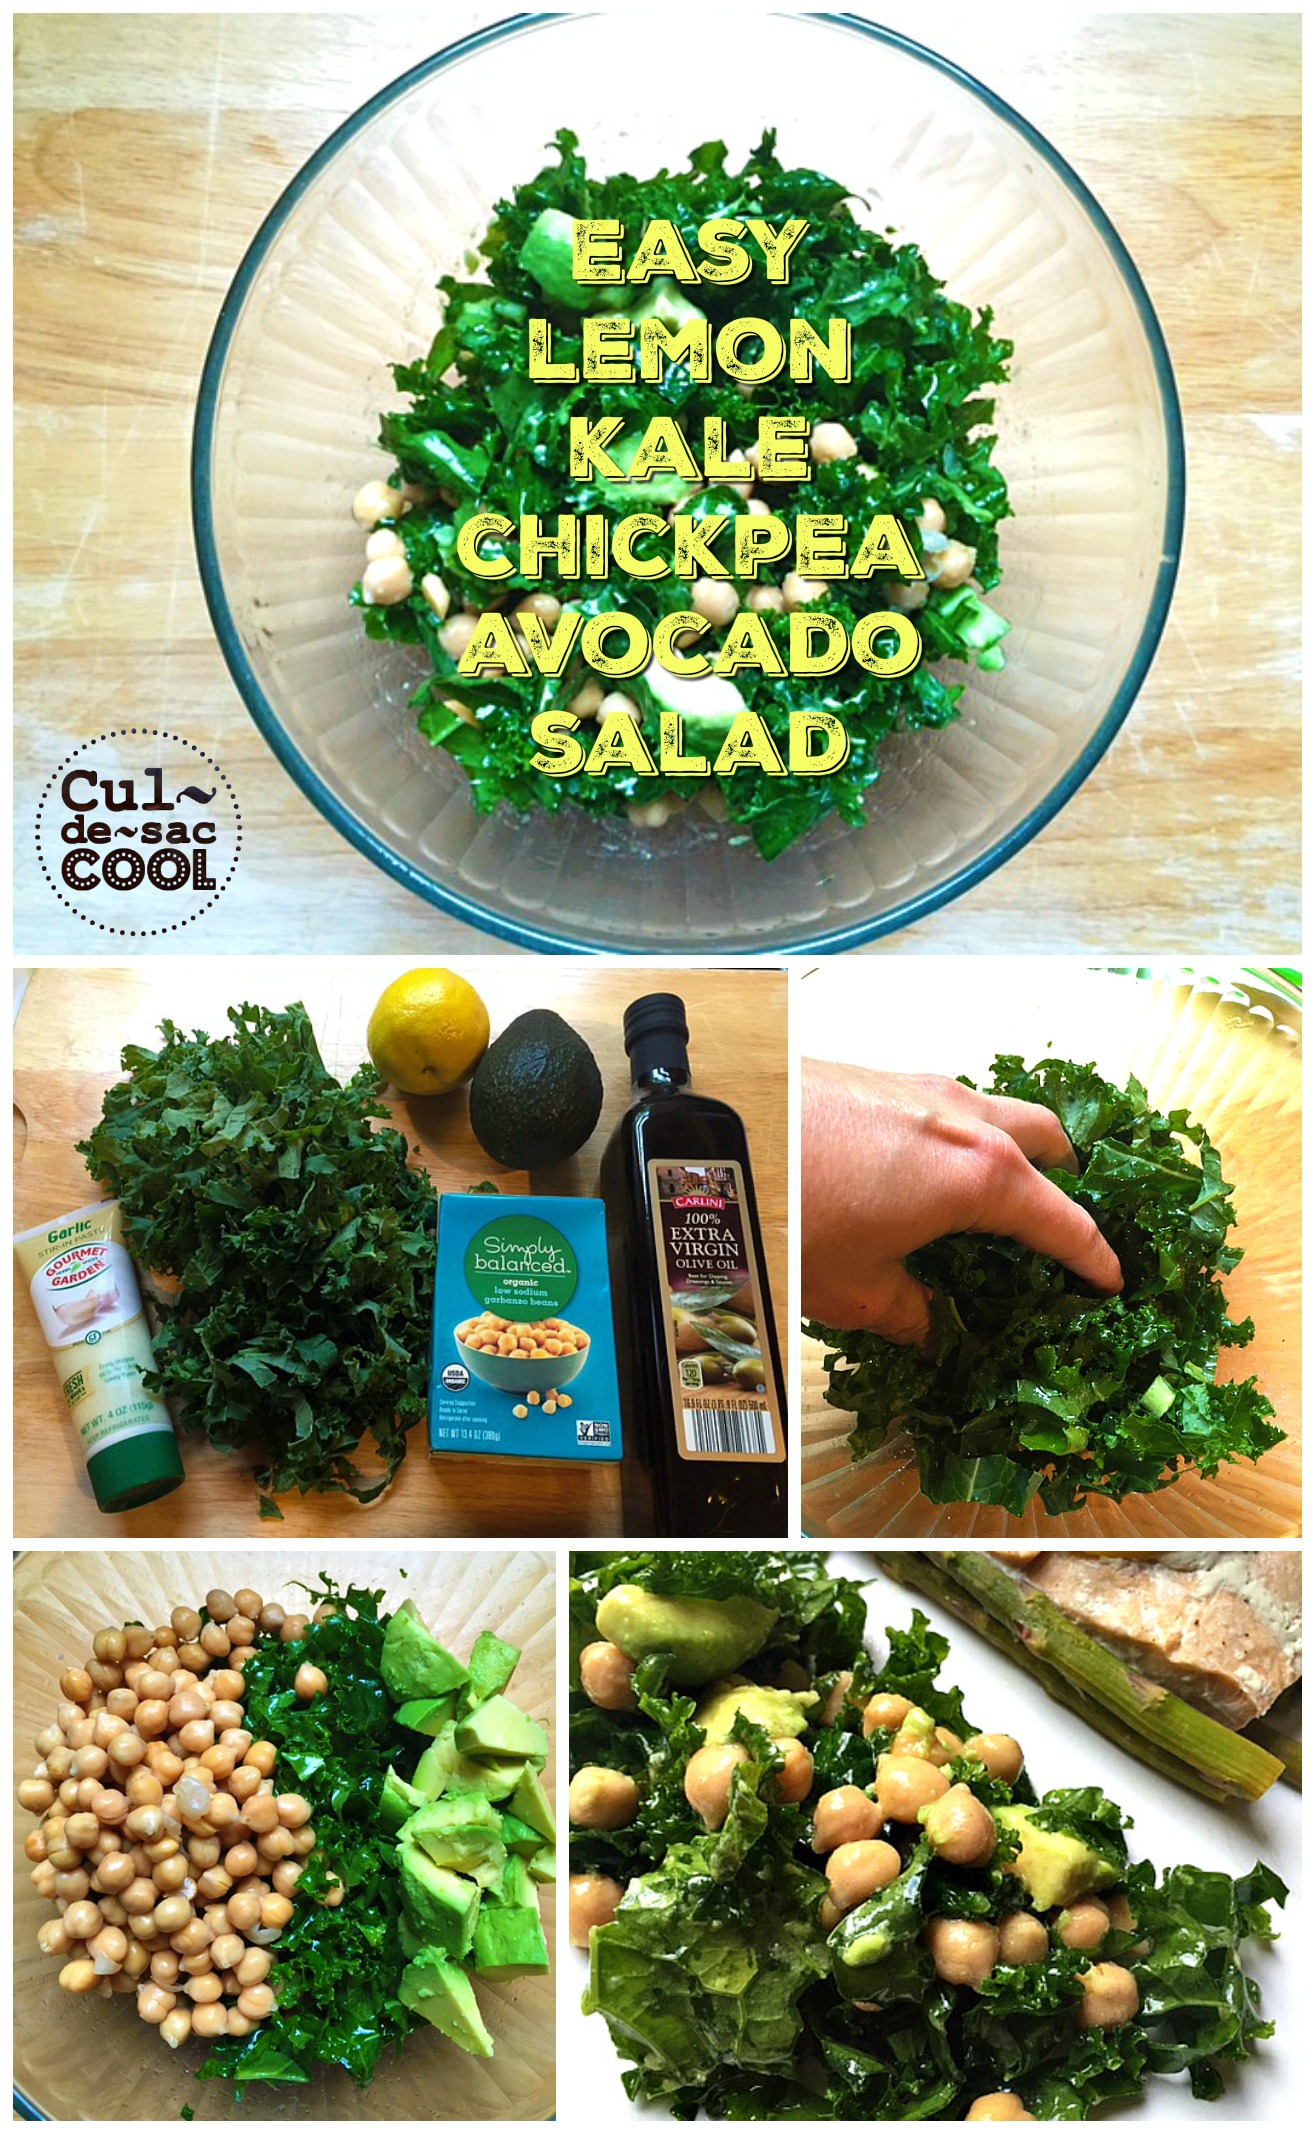 Easy Lemon Kale Chickpea Avocado Salad Collage